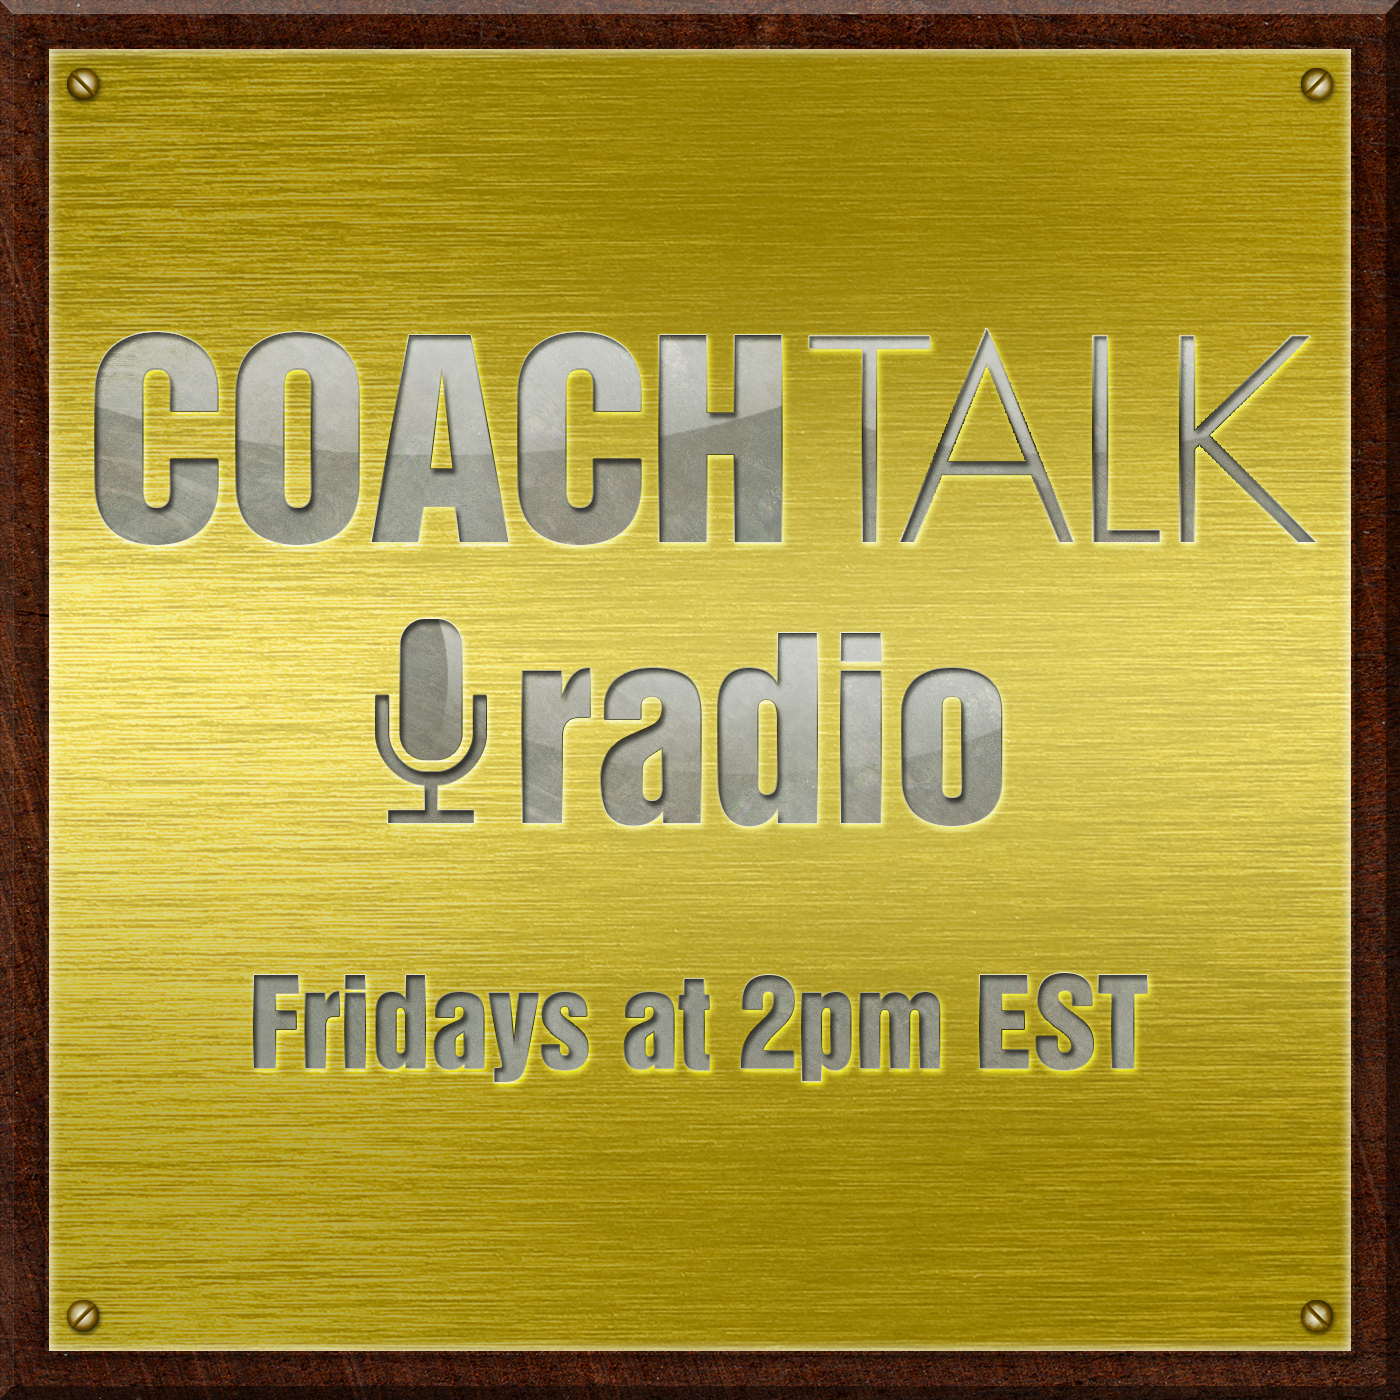 Coach Talk Radio